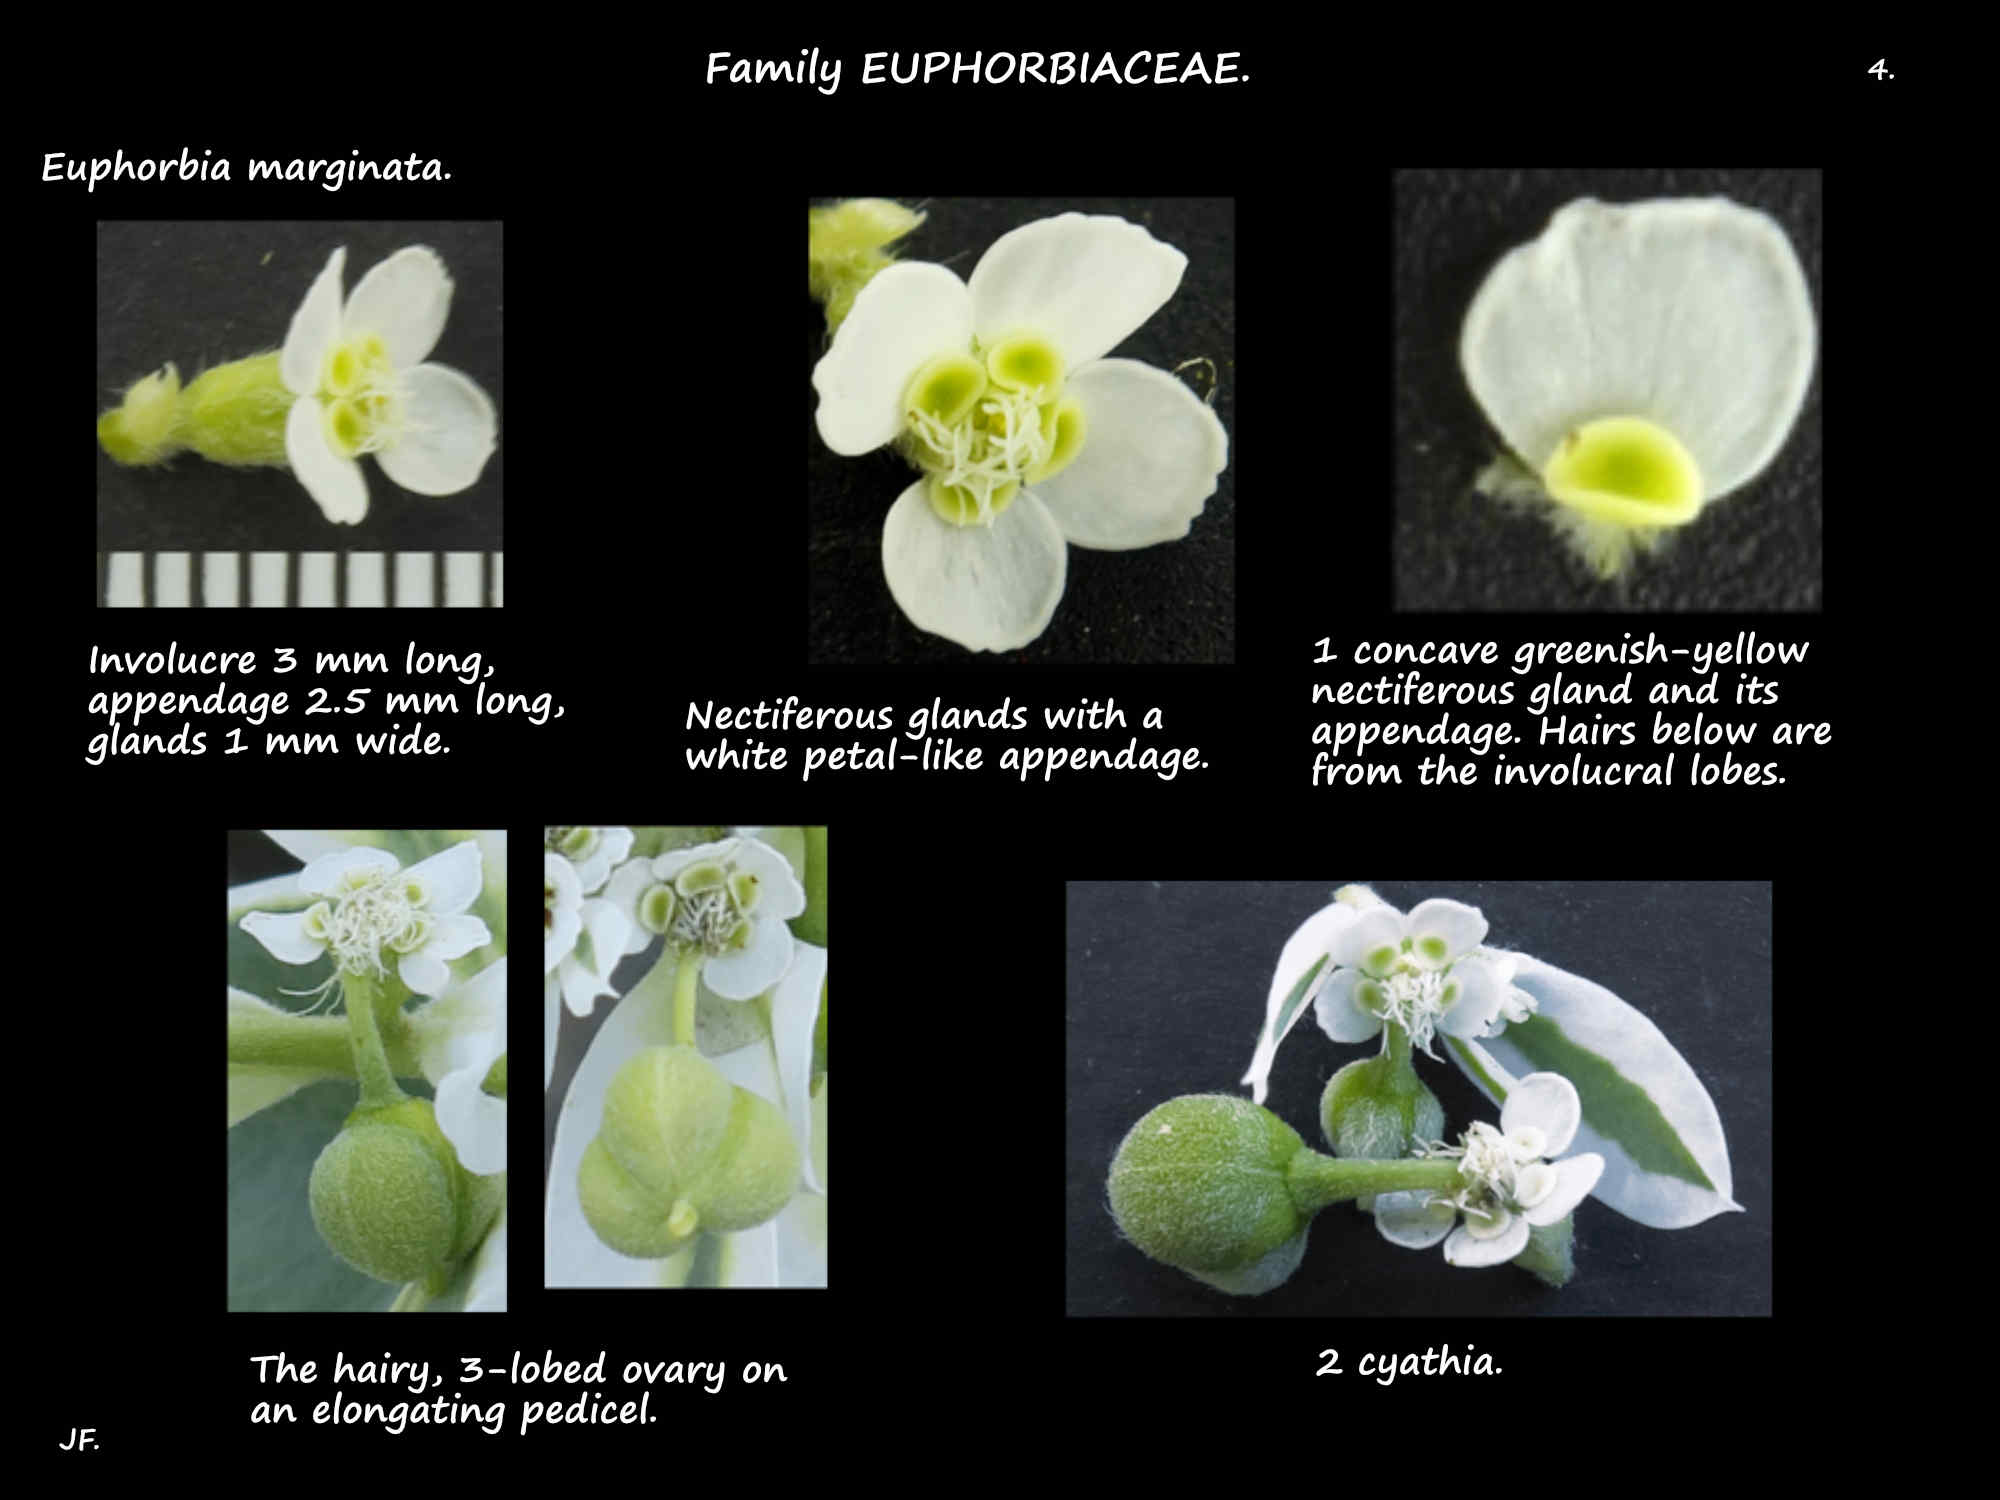 4 Cyathia, involucre & glands of Euphorbia marginata